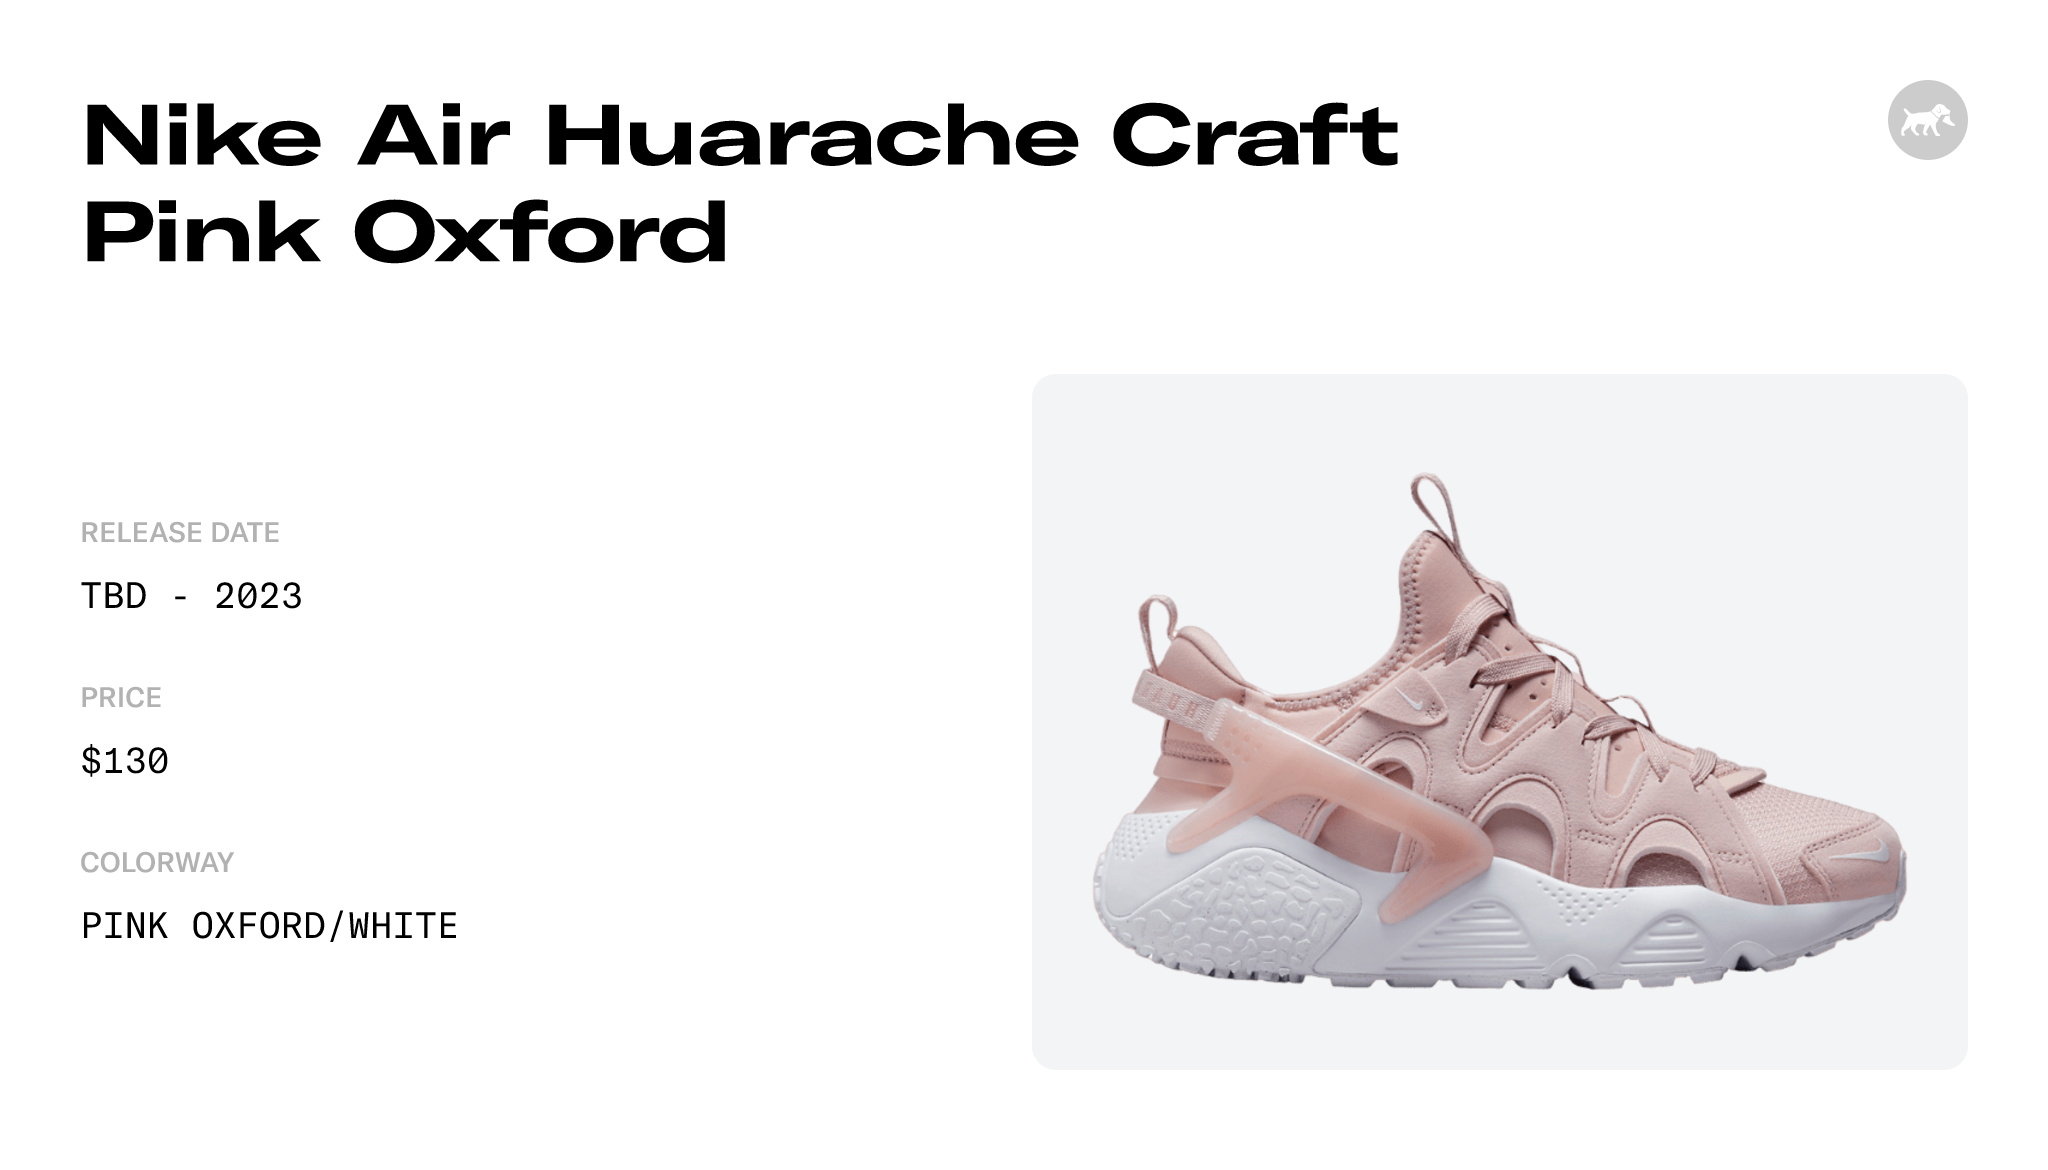 Nike Air Huarache Craft Pink Oxford - DQ8031-600 Raffles and